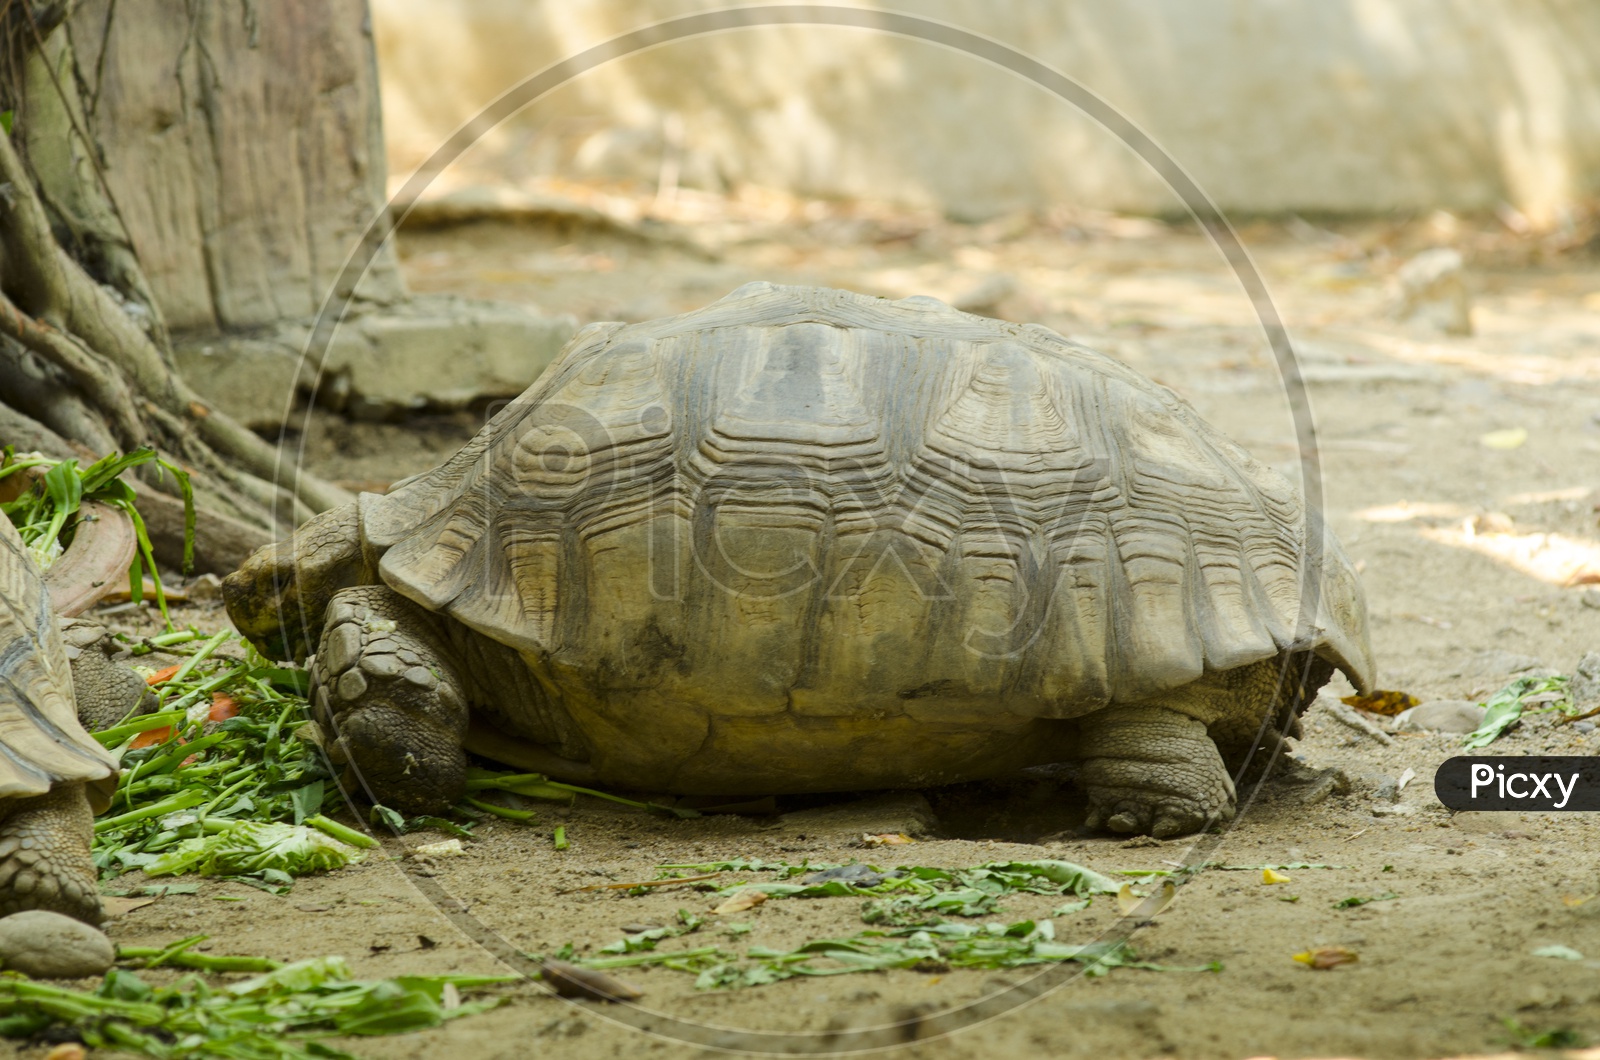 Turtles breeding in the zoo